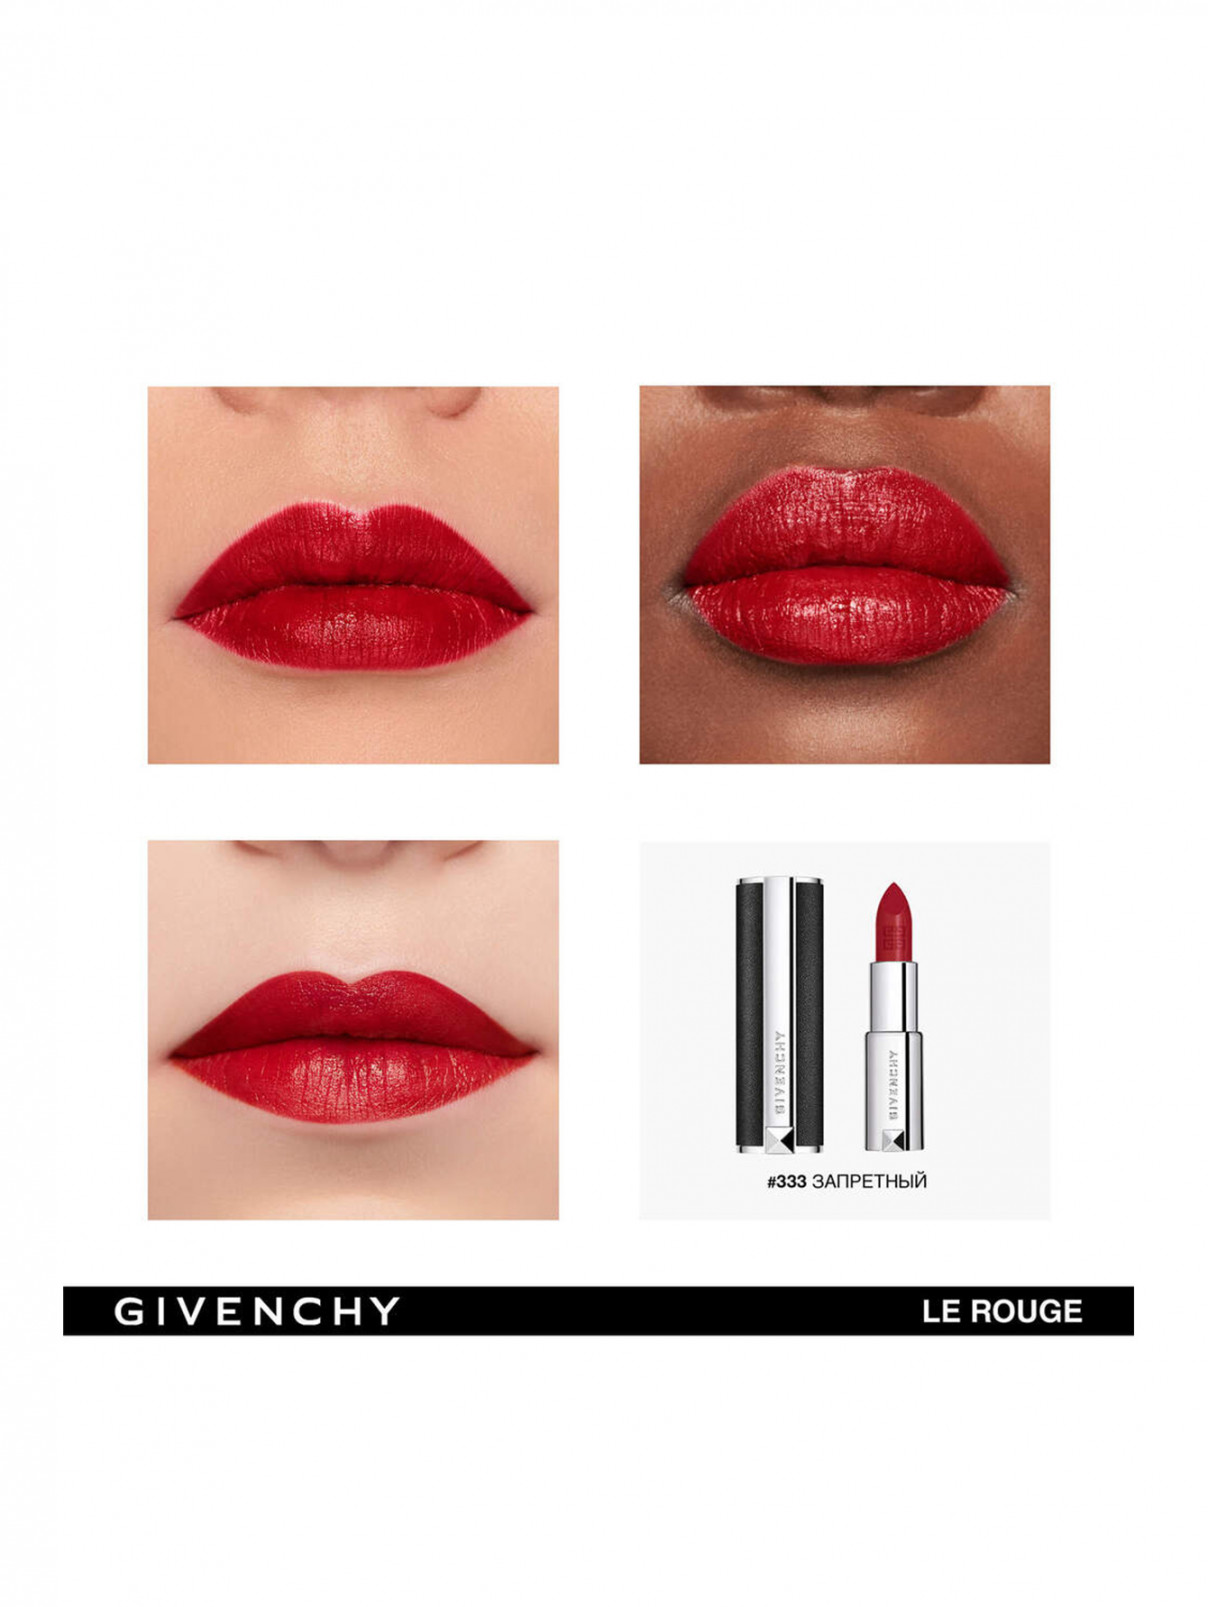 Givenchy губная помада с сатиново-матовым эффектом le rouge, 333 запретный,  3.4 г (531109). Цена: 2 850 руб.